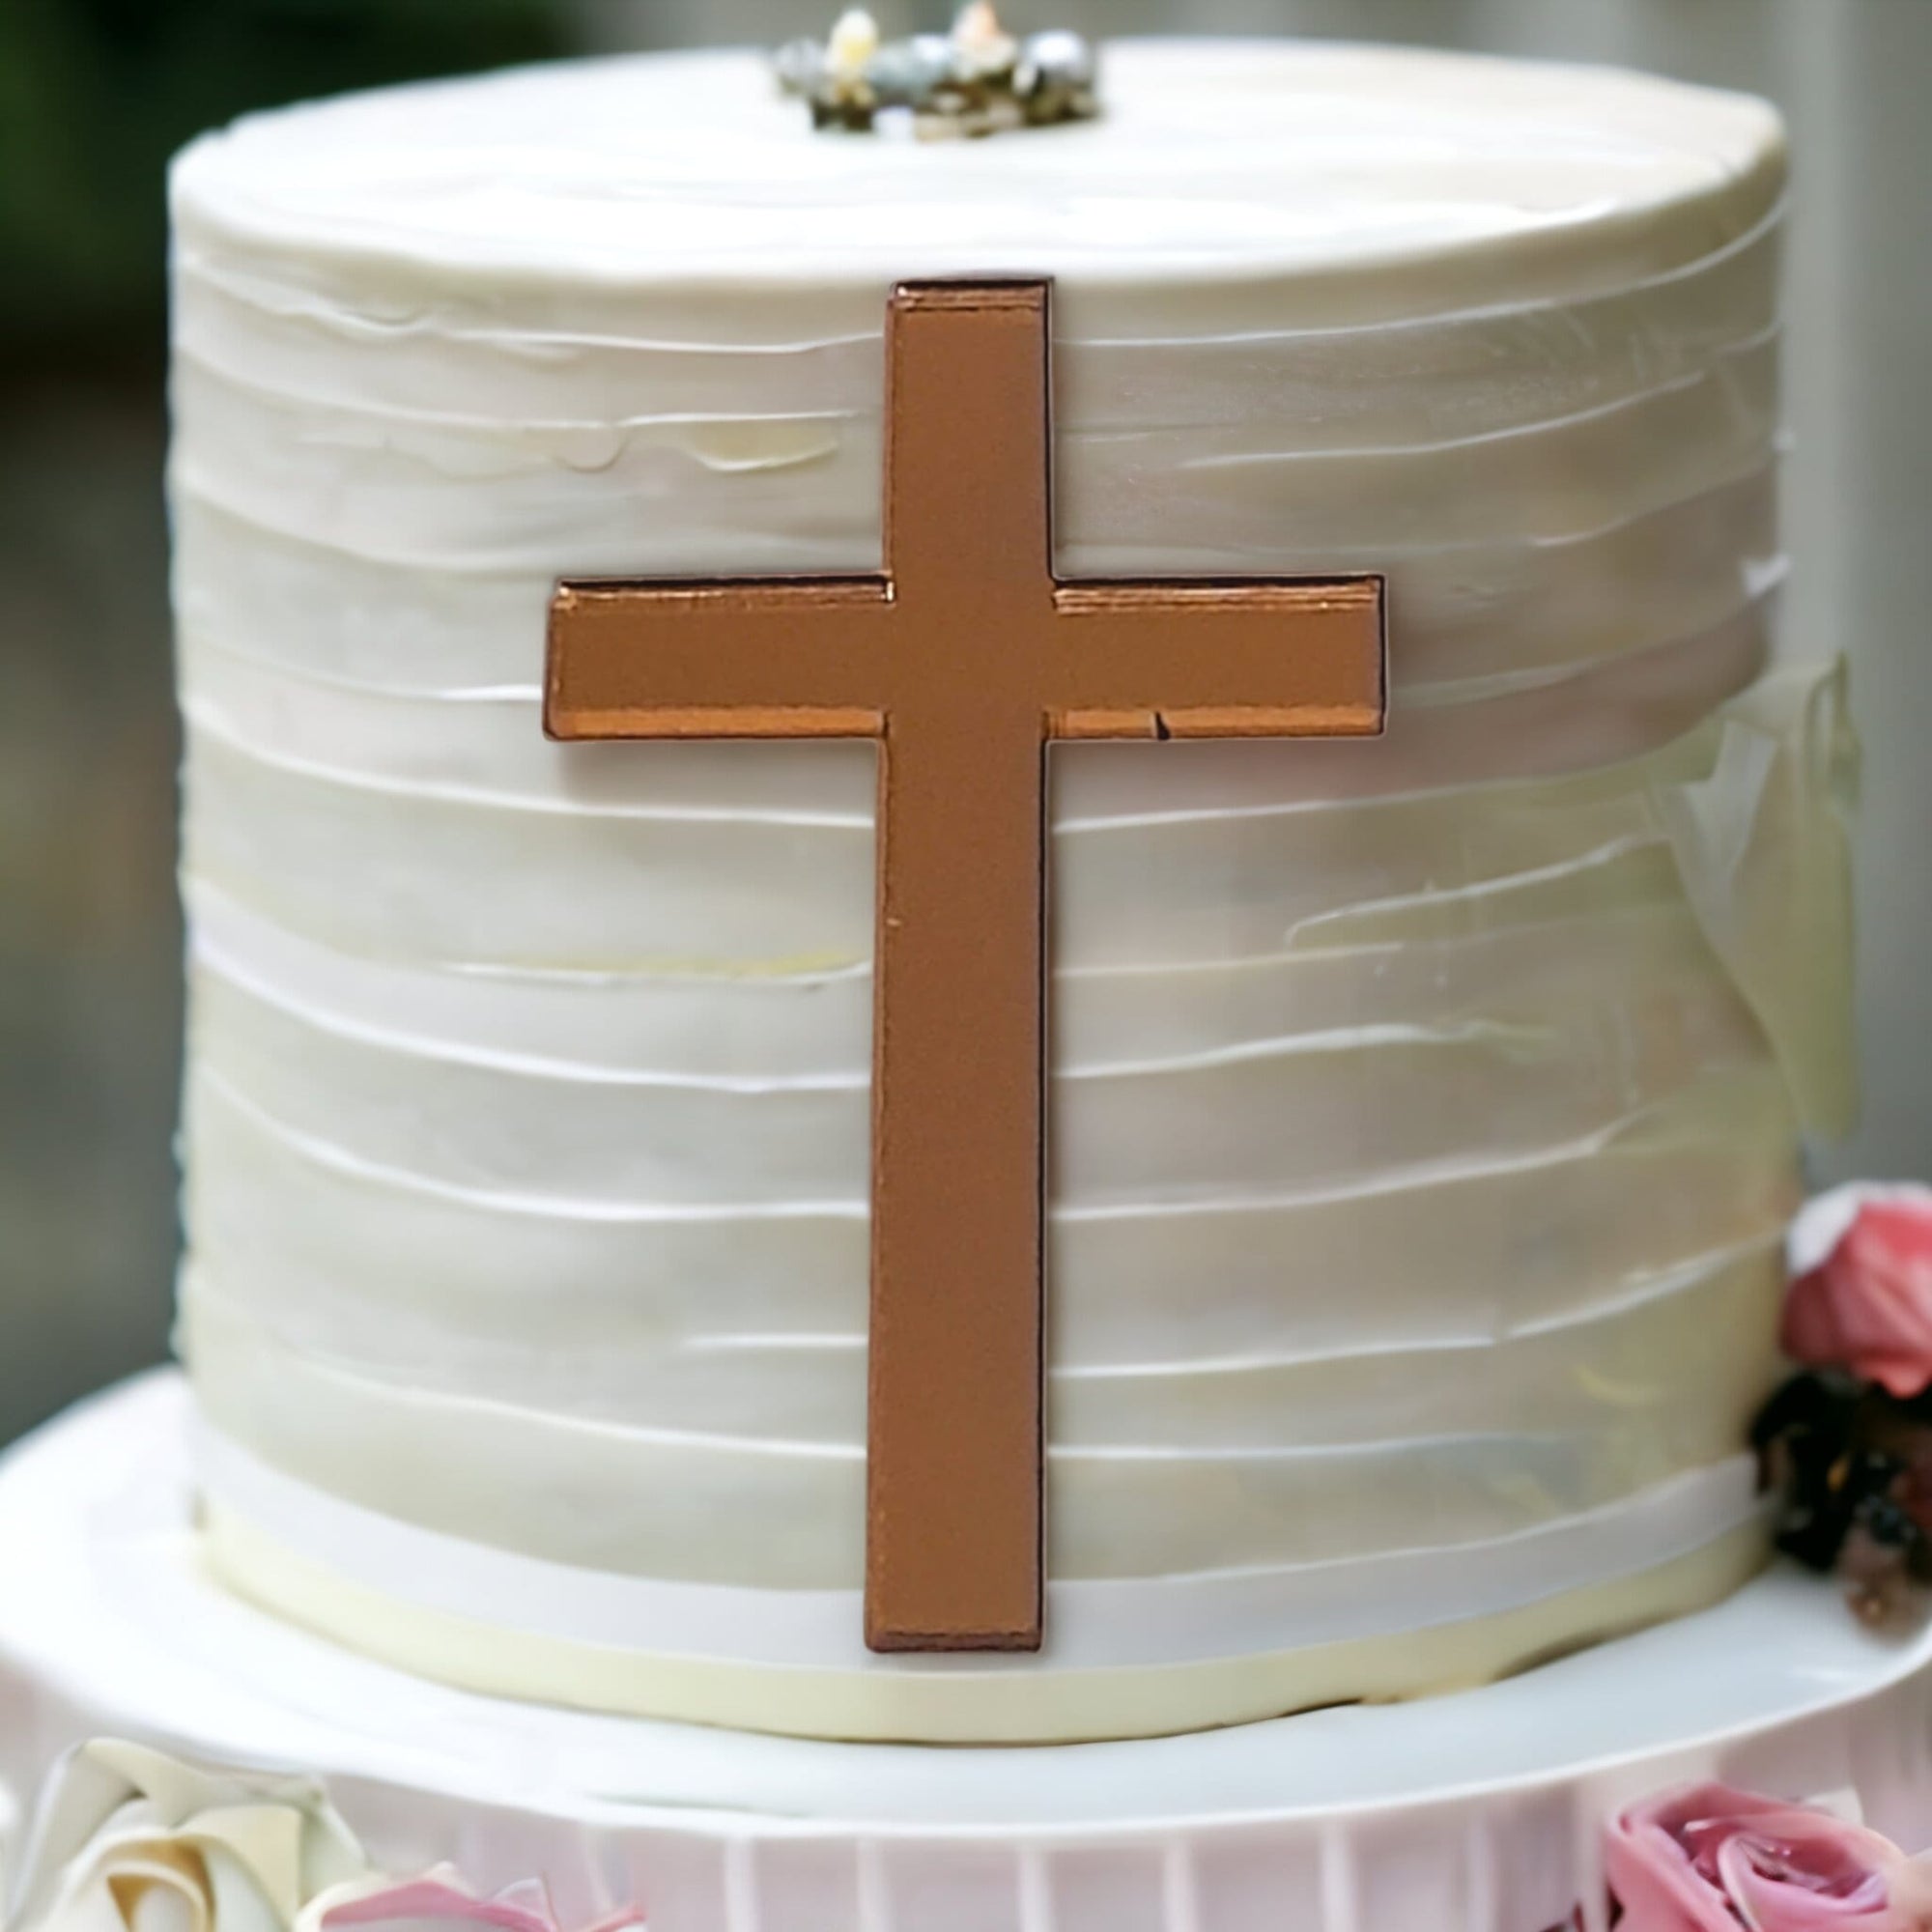 Cross Cake Decoration, Acrylic Cross Cake Charm Topper, Cake Decoration Acrylic Baptism Cross Cake Charm Religious Celebration Premium 3mm Acrylic